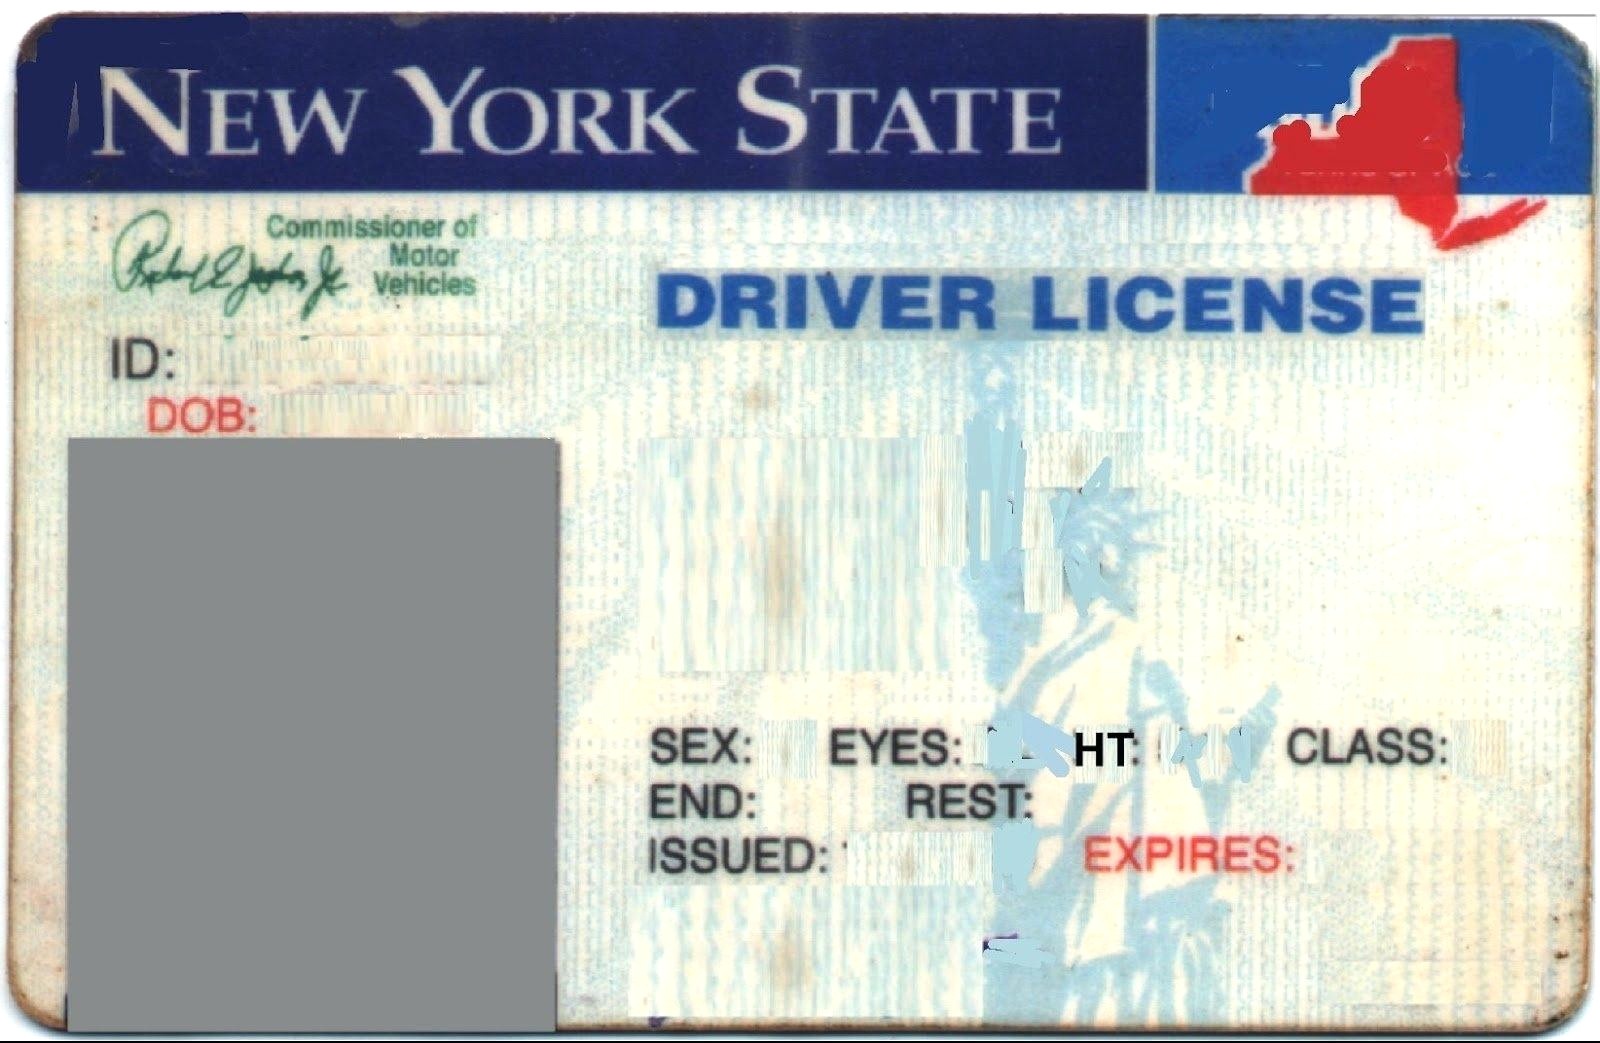 Free Printable Fake Drivers License Printable Free Templates Download